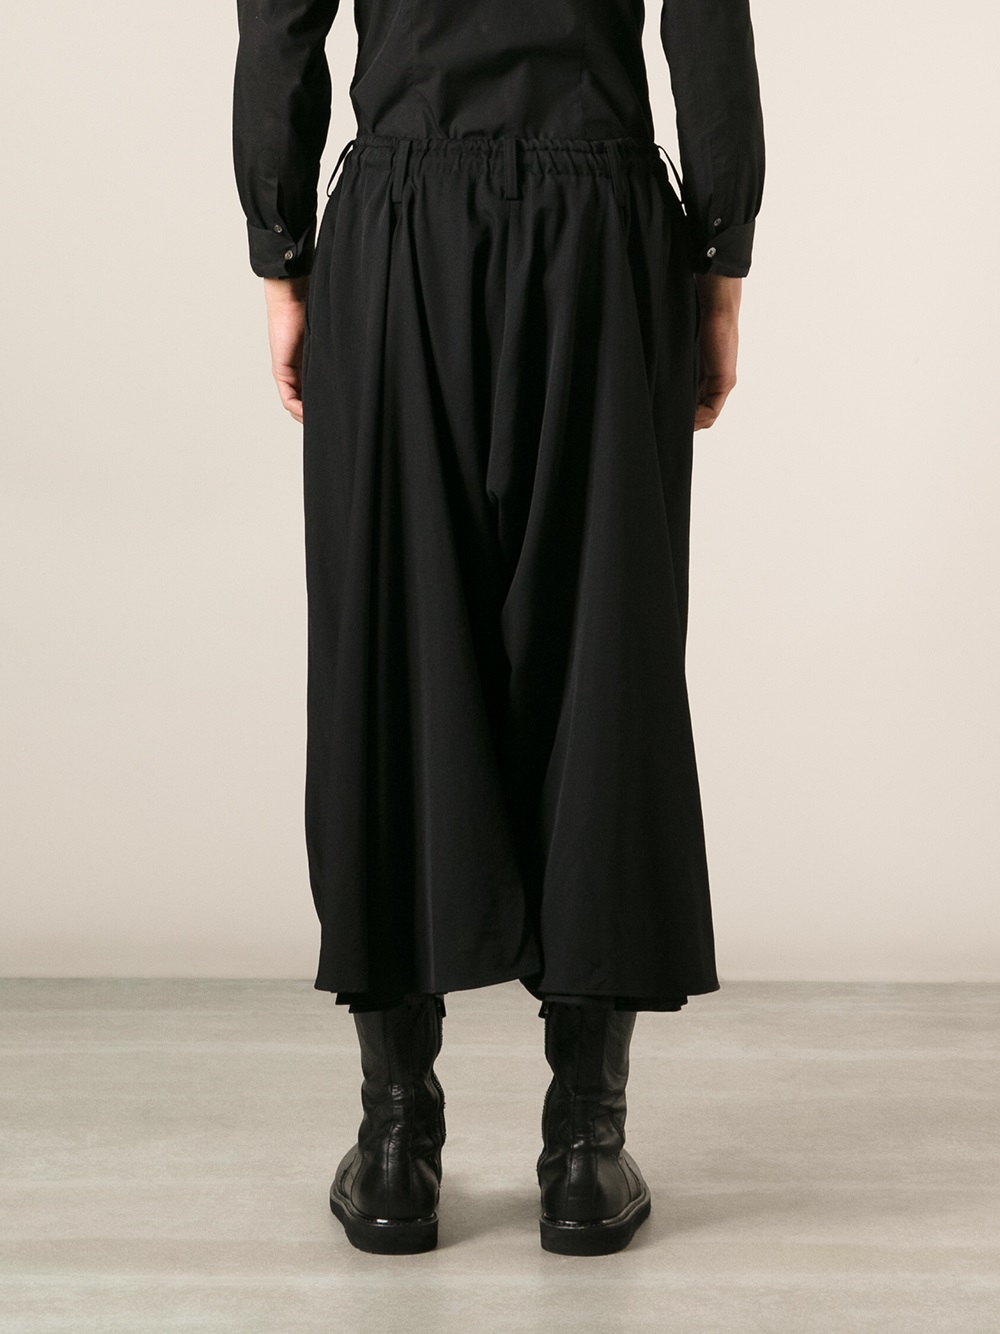 Yohji Yamamoto J Crow Trousers in Black for Men - Lyst